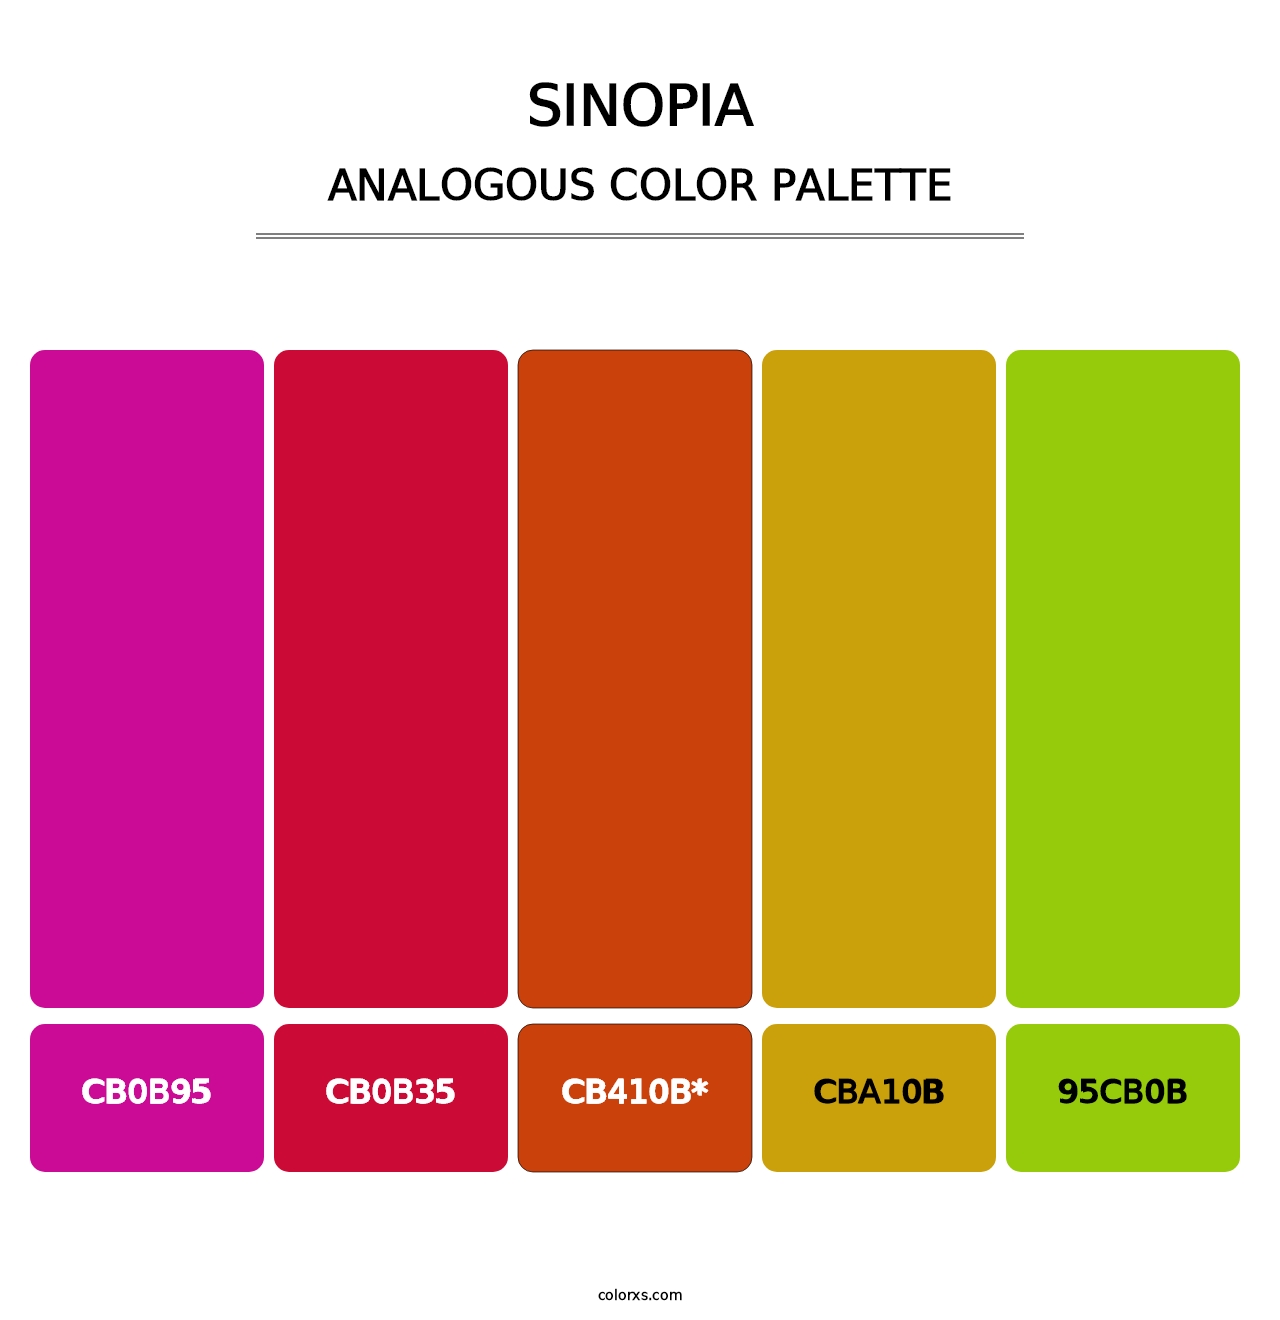 Sinopia - Analogous Color Palette